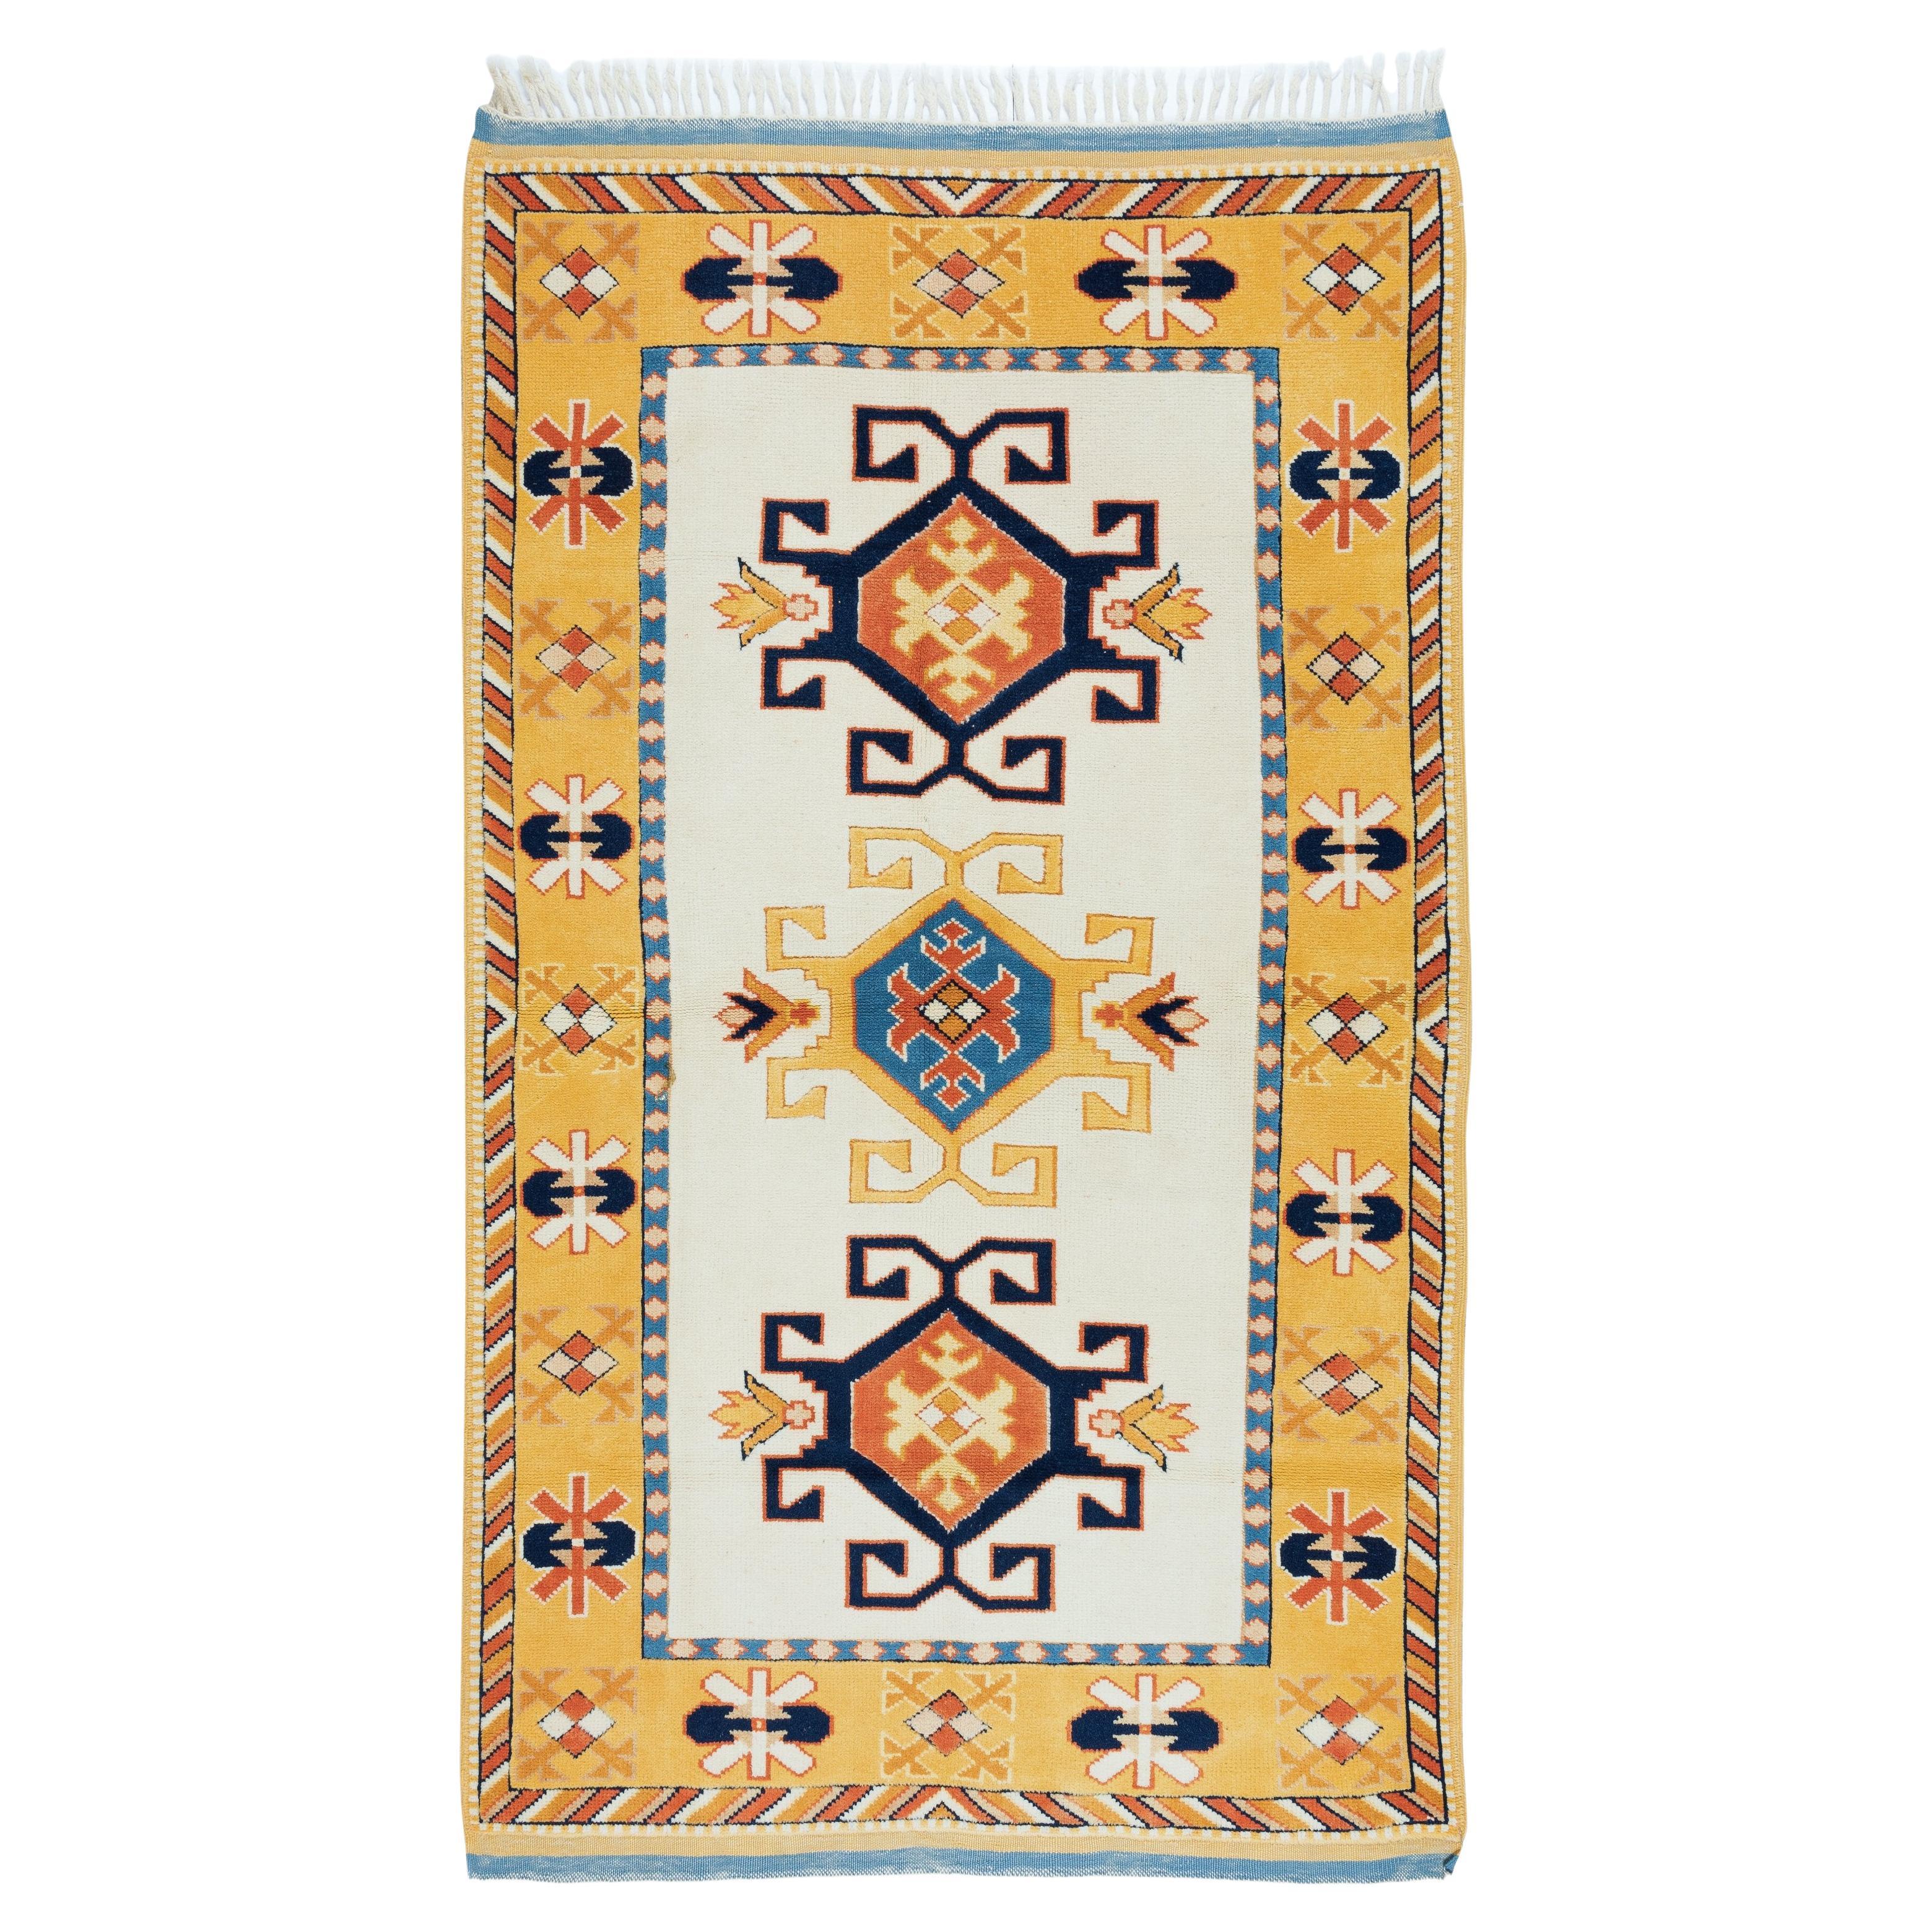 4x6 Ft Modern Handmade Turkish Wool Rug with Geometric Design, 100% Wool